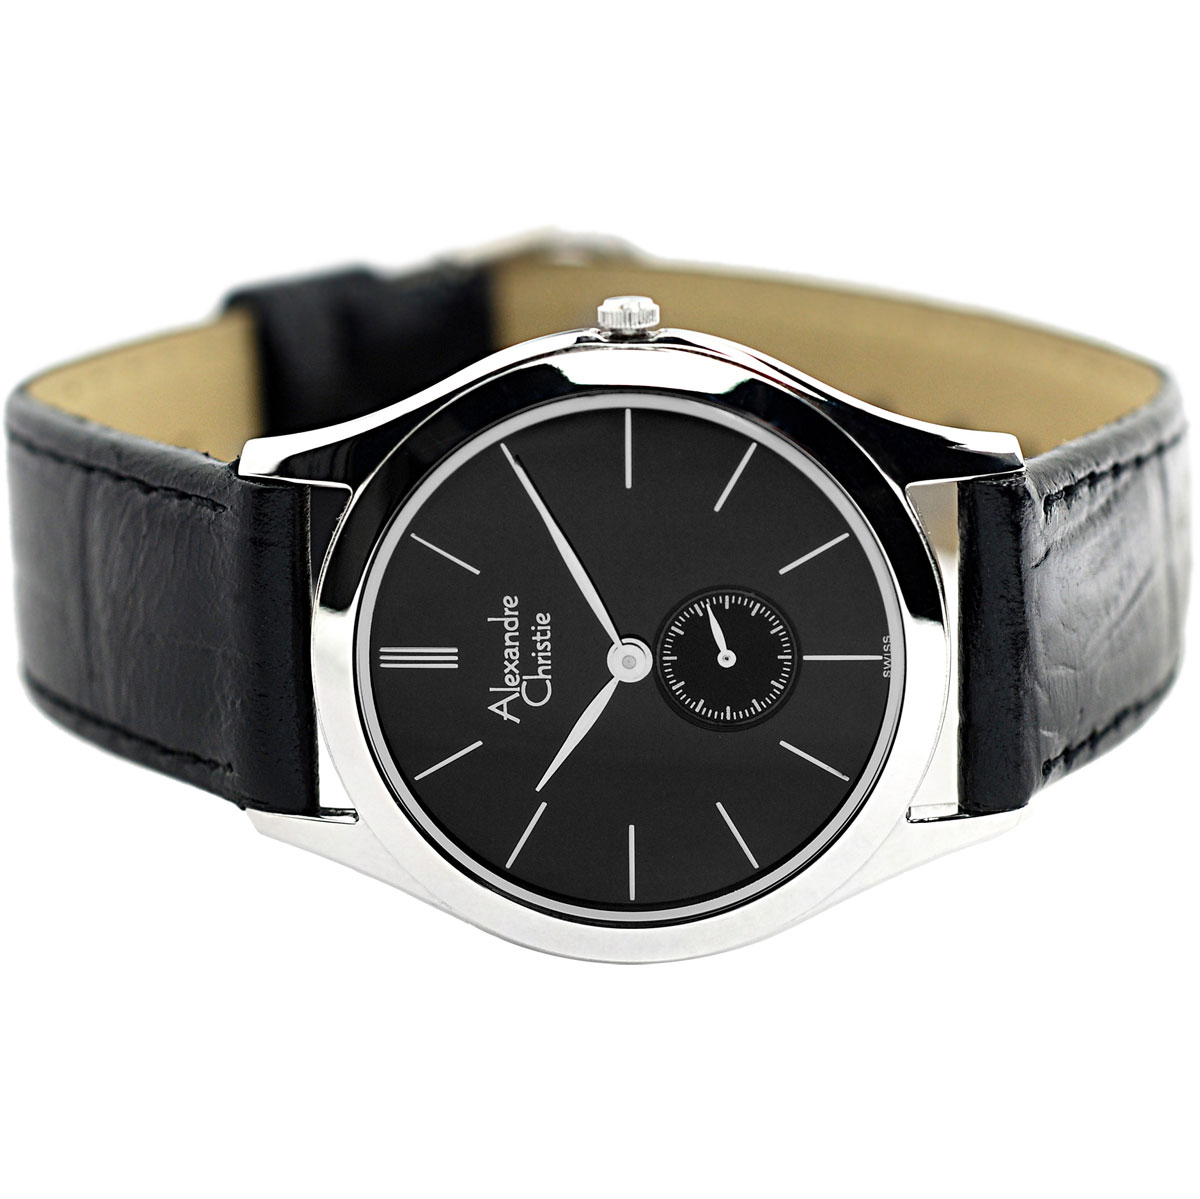 GUCCI Men's Watch YA114214 I White watches brand new (China Trading